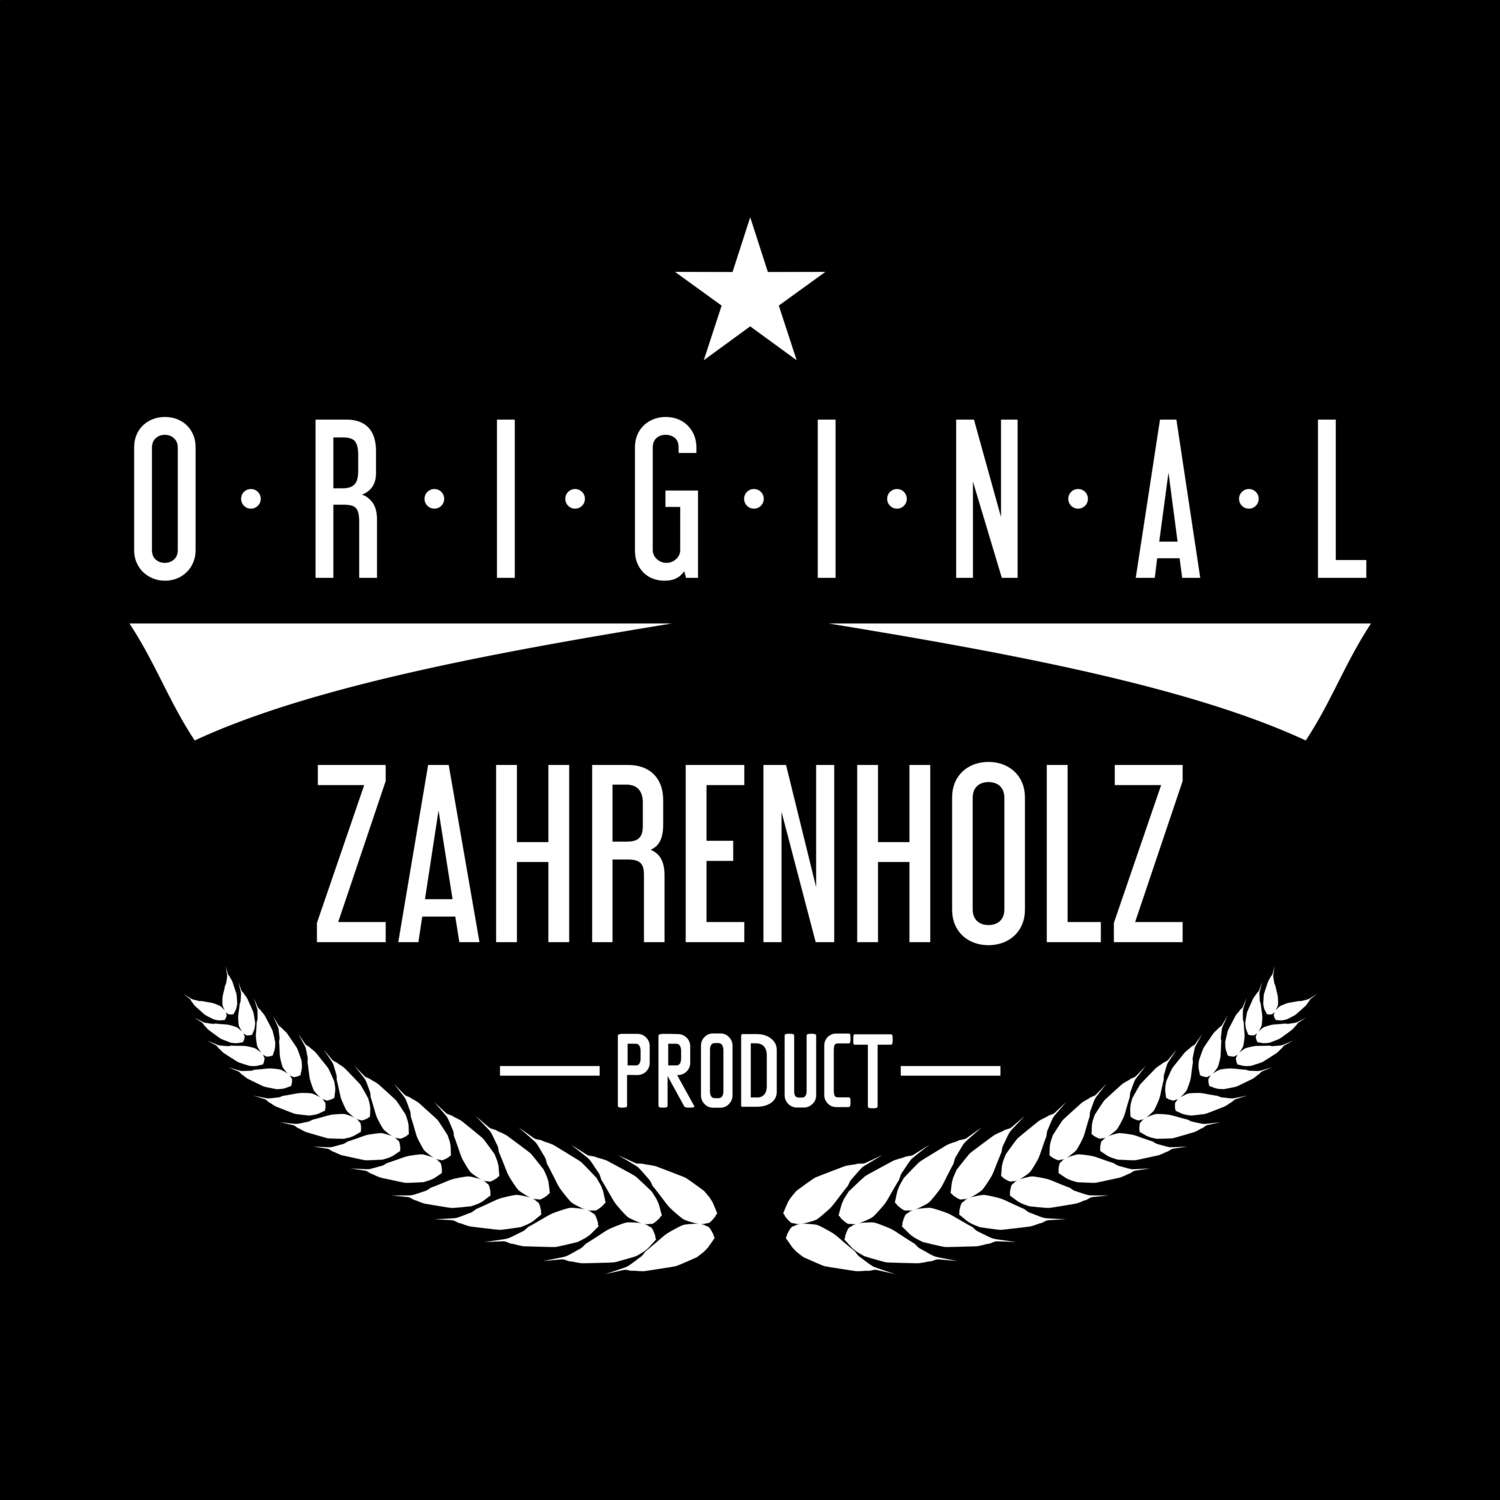 Zahrenholz T-Shirt »Original Product«